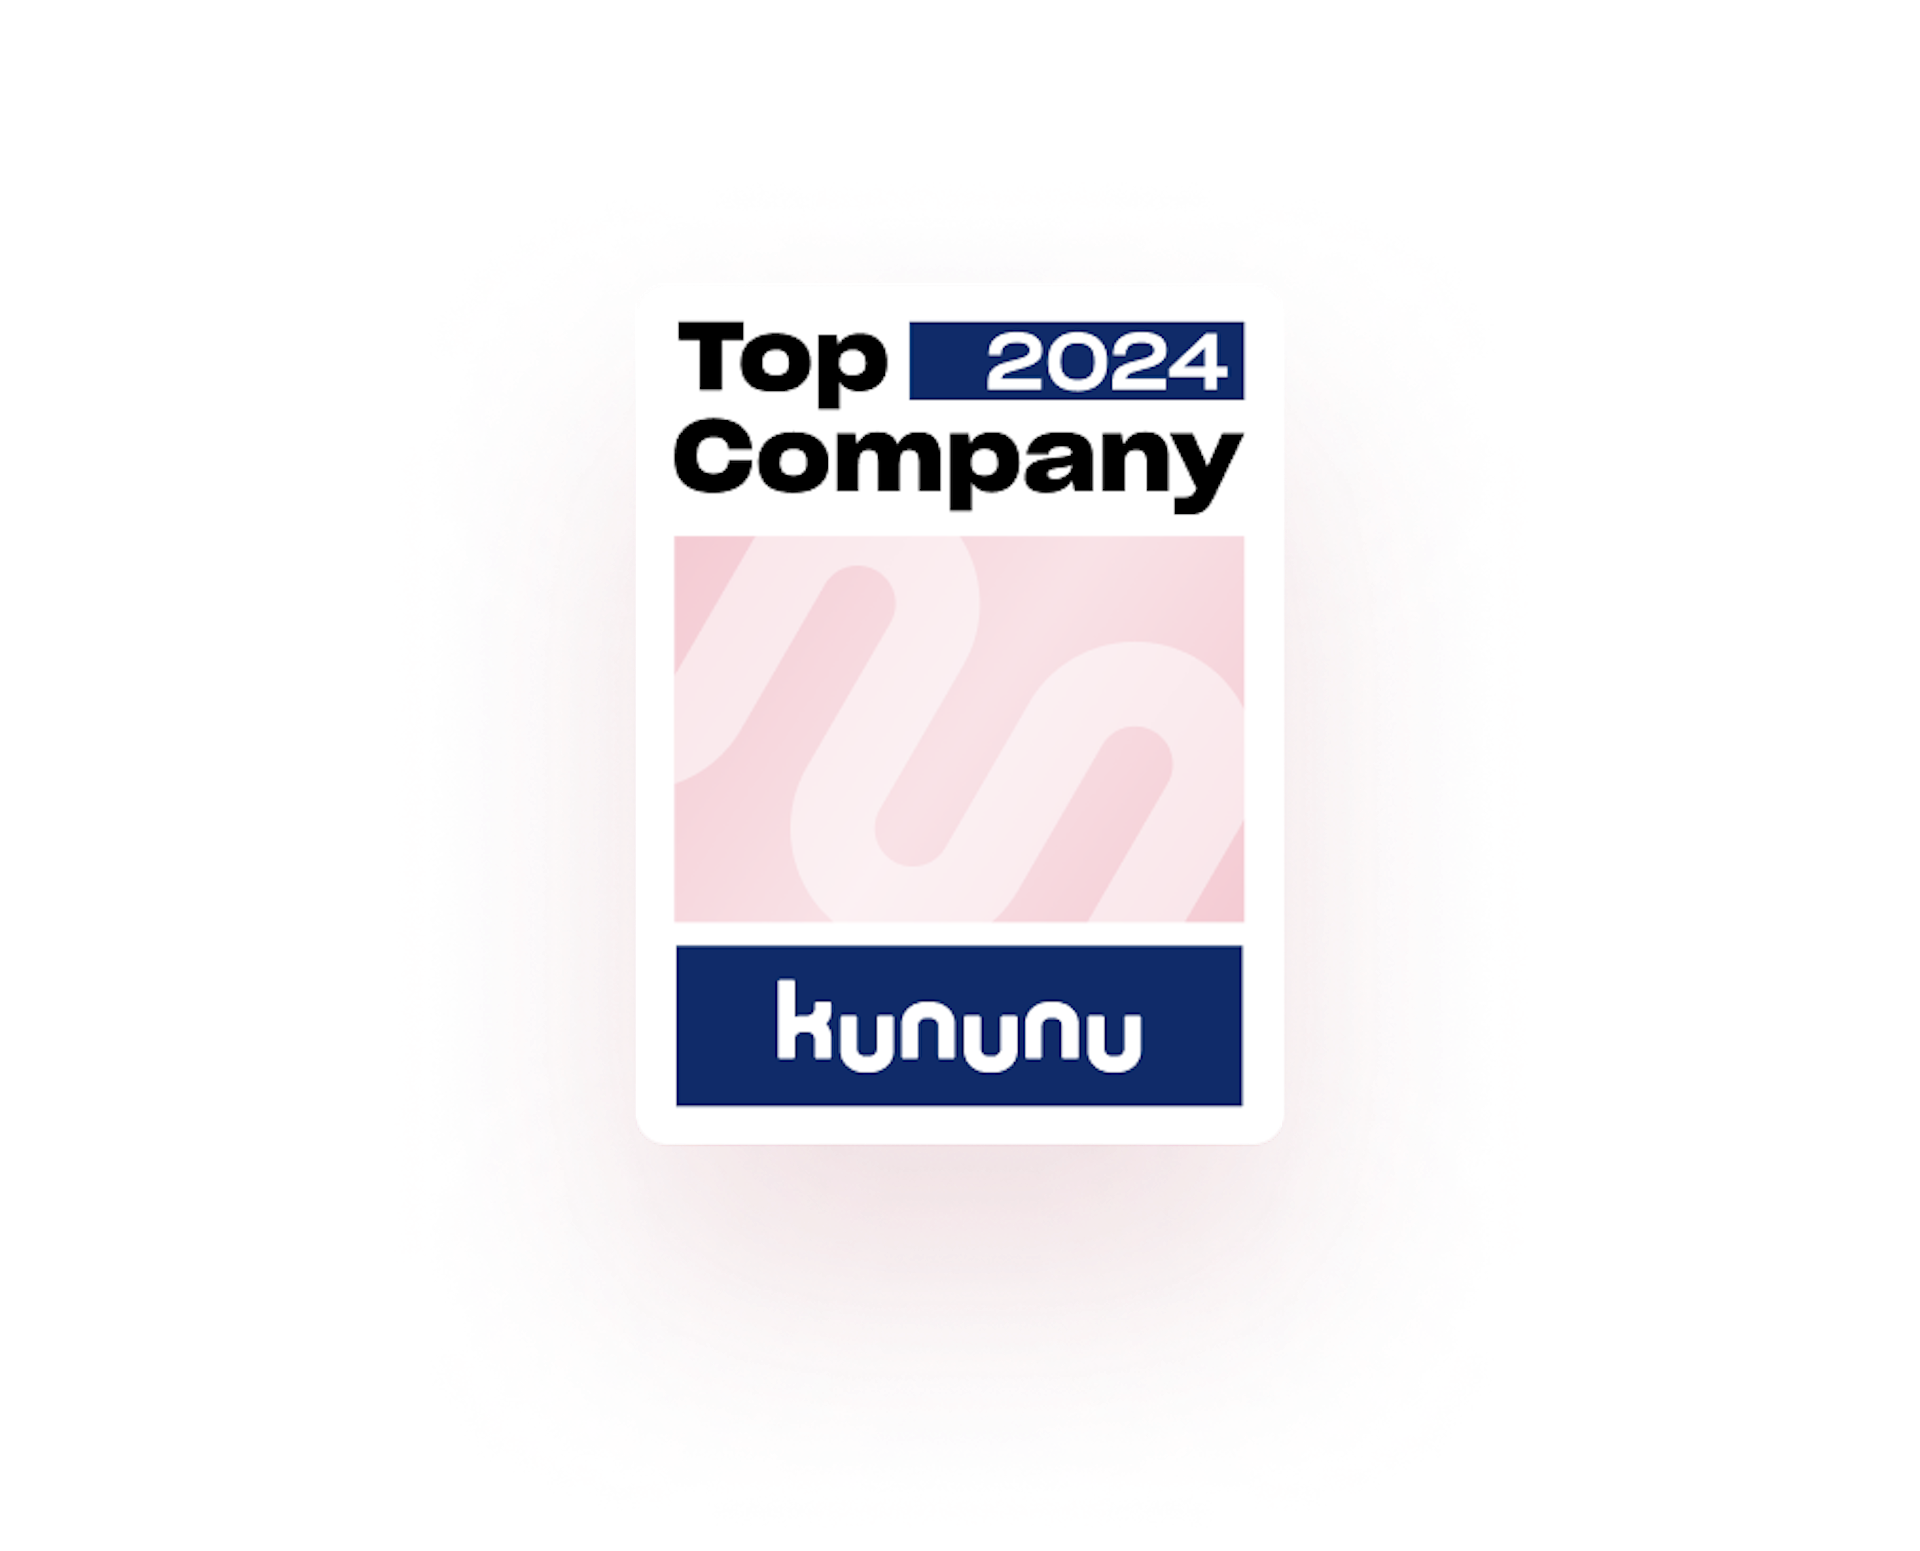 The Kununu badge for top company in 2024